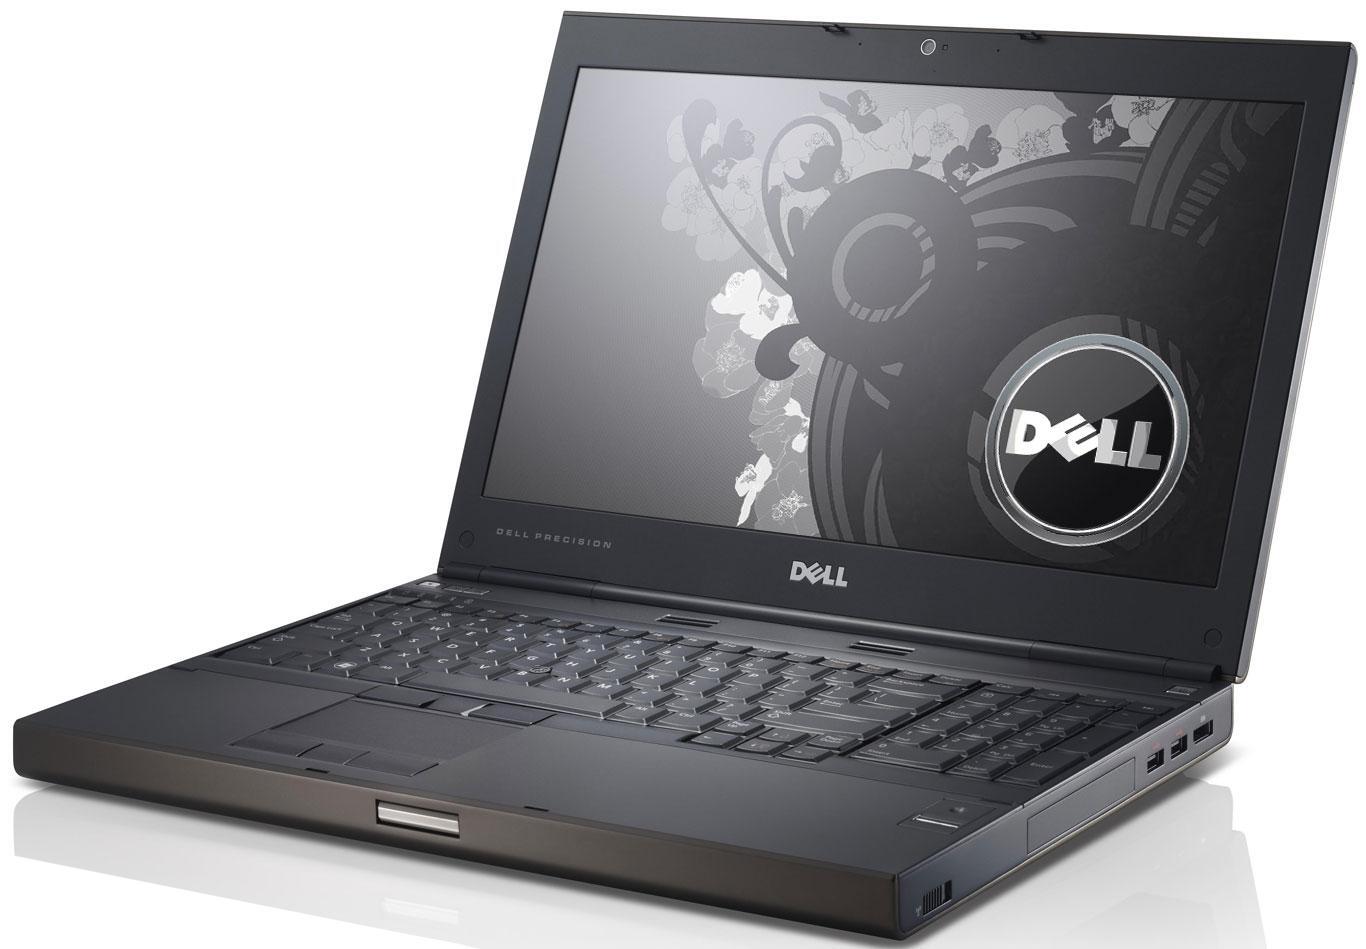 Laptop Dell Precision M4600 - Intel Core i7-2920XM 2.5GHz, 8GB RAM, 750GB HDD, NVIDIA Quadro FX 1000M 2GB, 15.6 inch